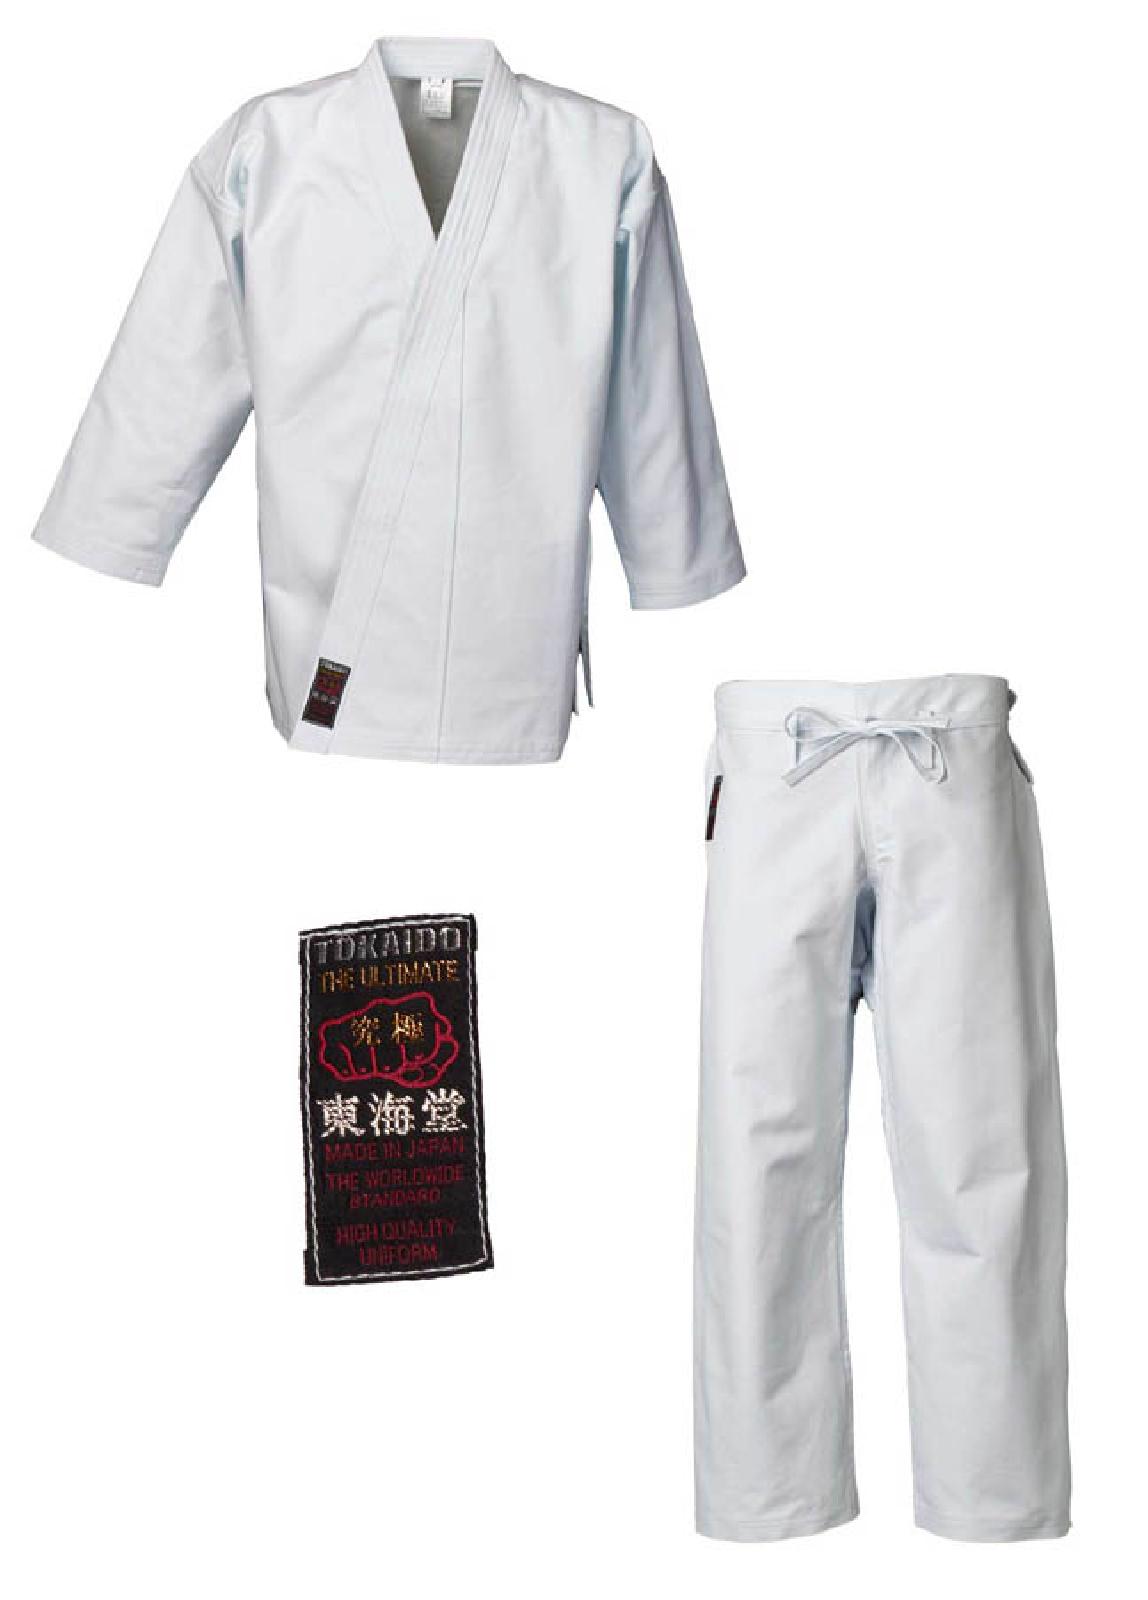 Karate Anzug für Kumite TOKAIDO Karategi "Hayate" Karateanzug MADE IN JAPAN 